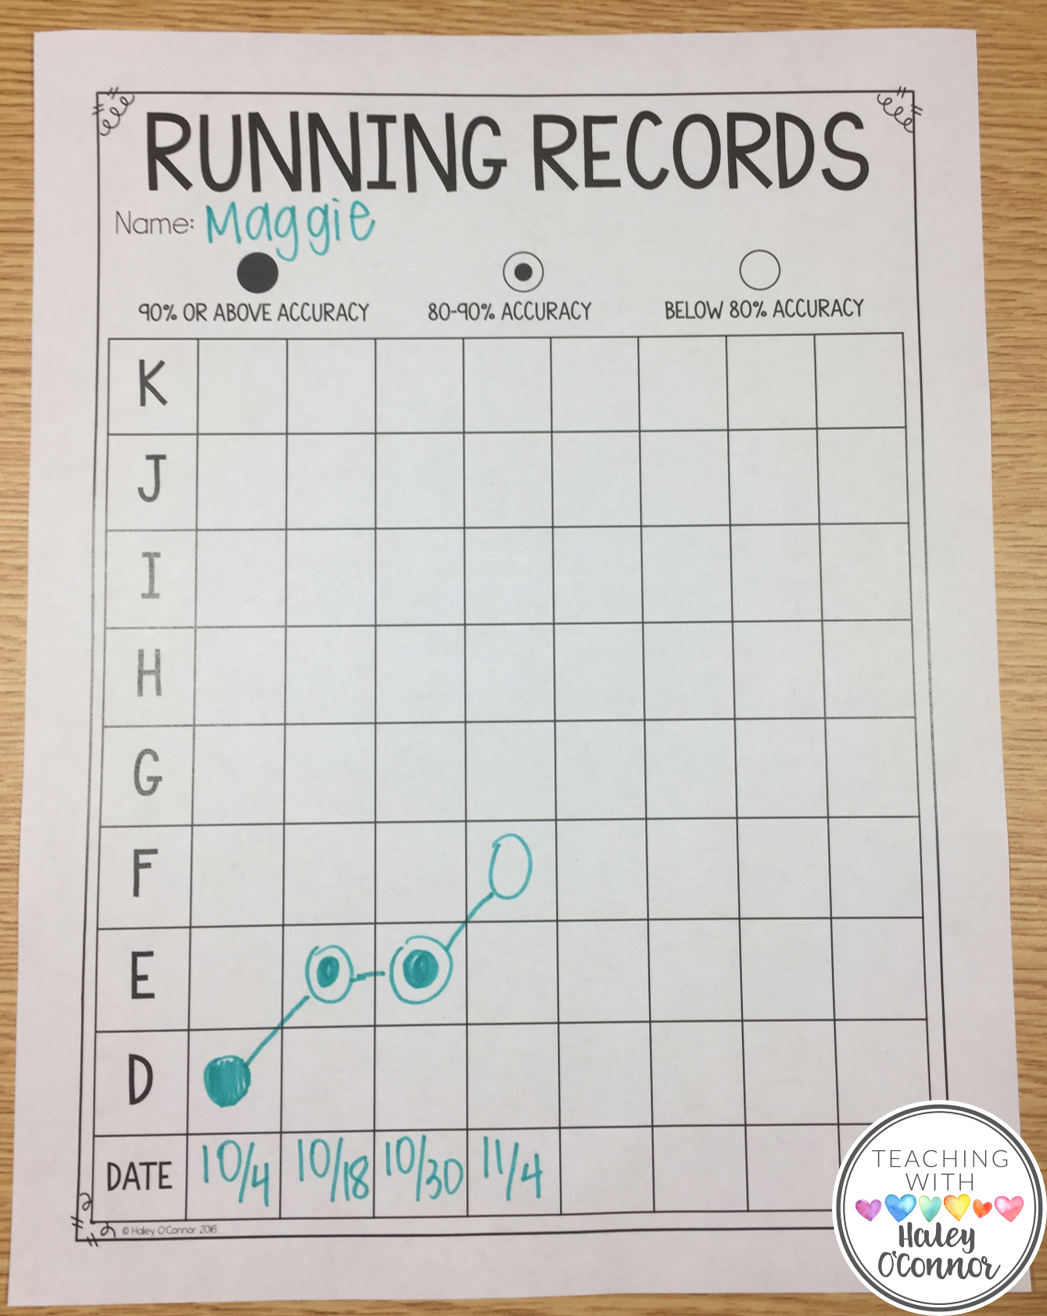 Running Record Tracking Form Progress Monitoring